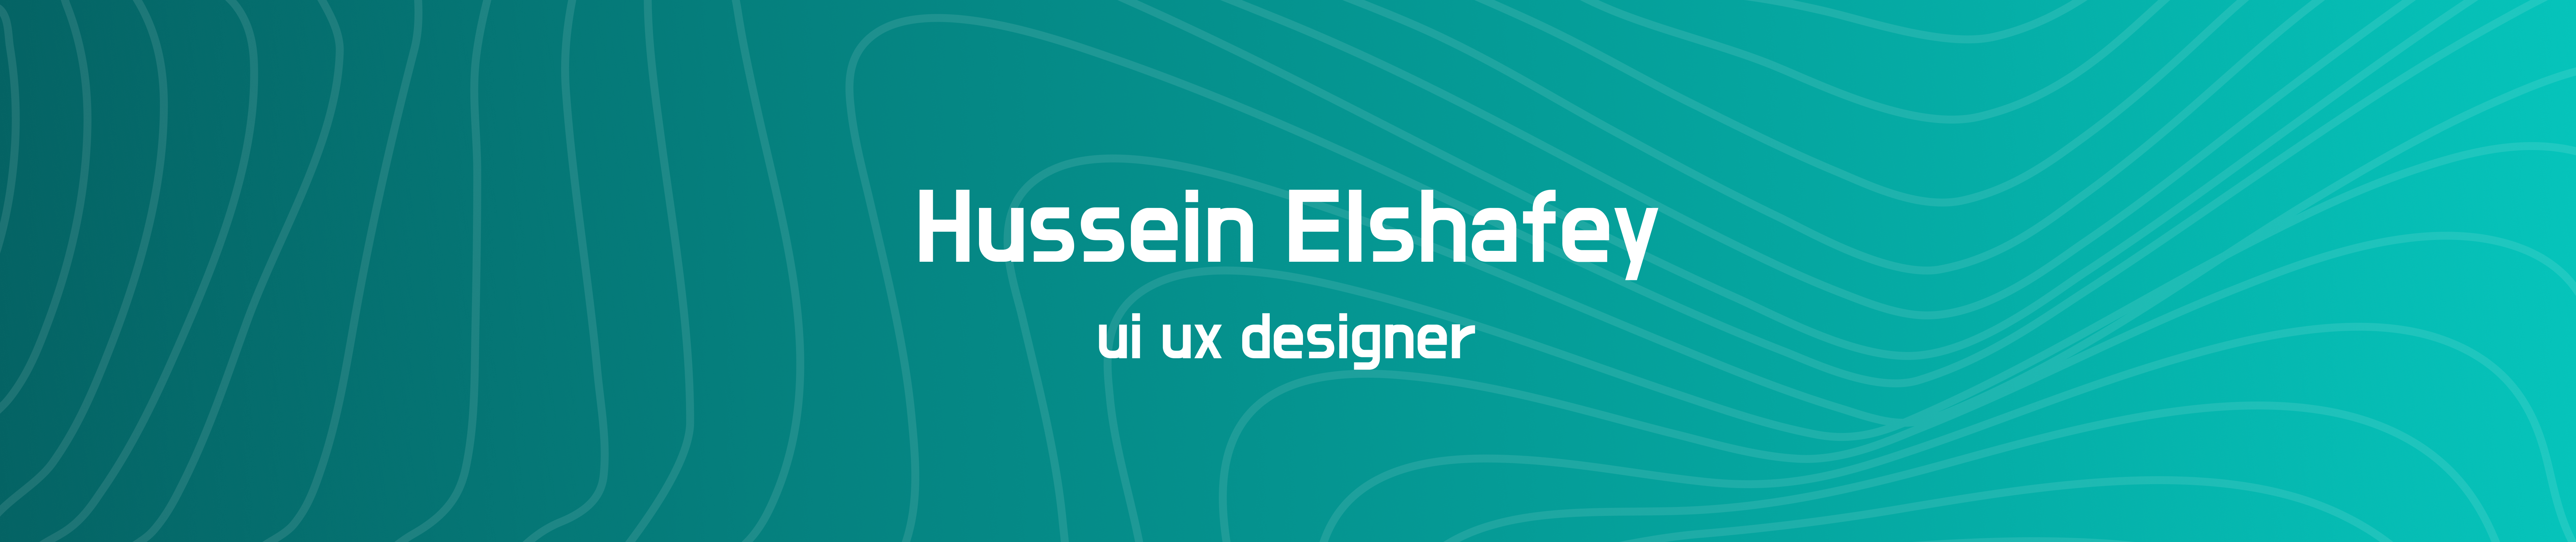 Hussein Elshafey's profile banner